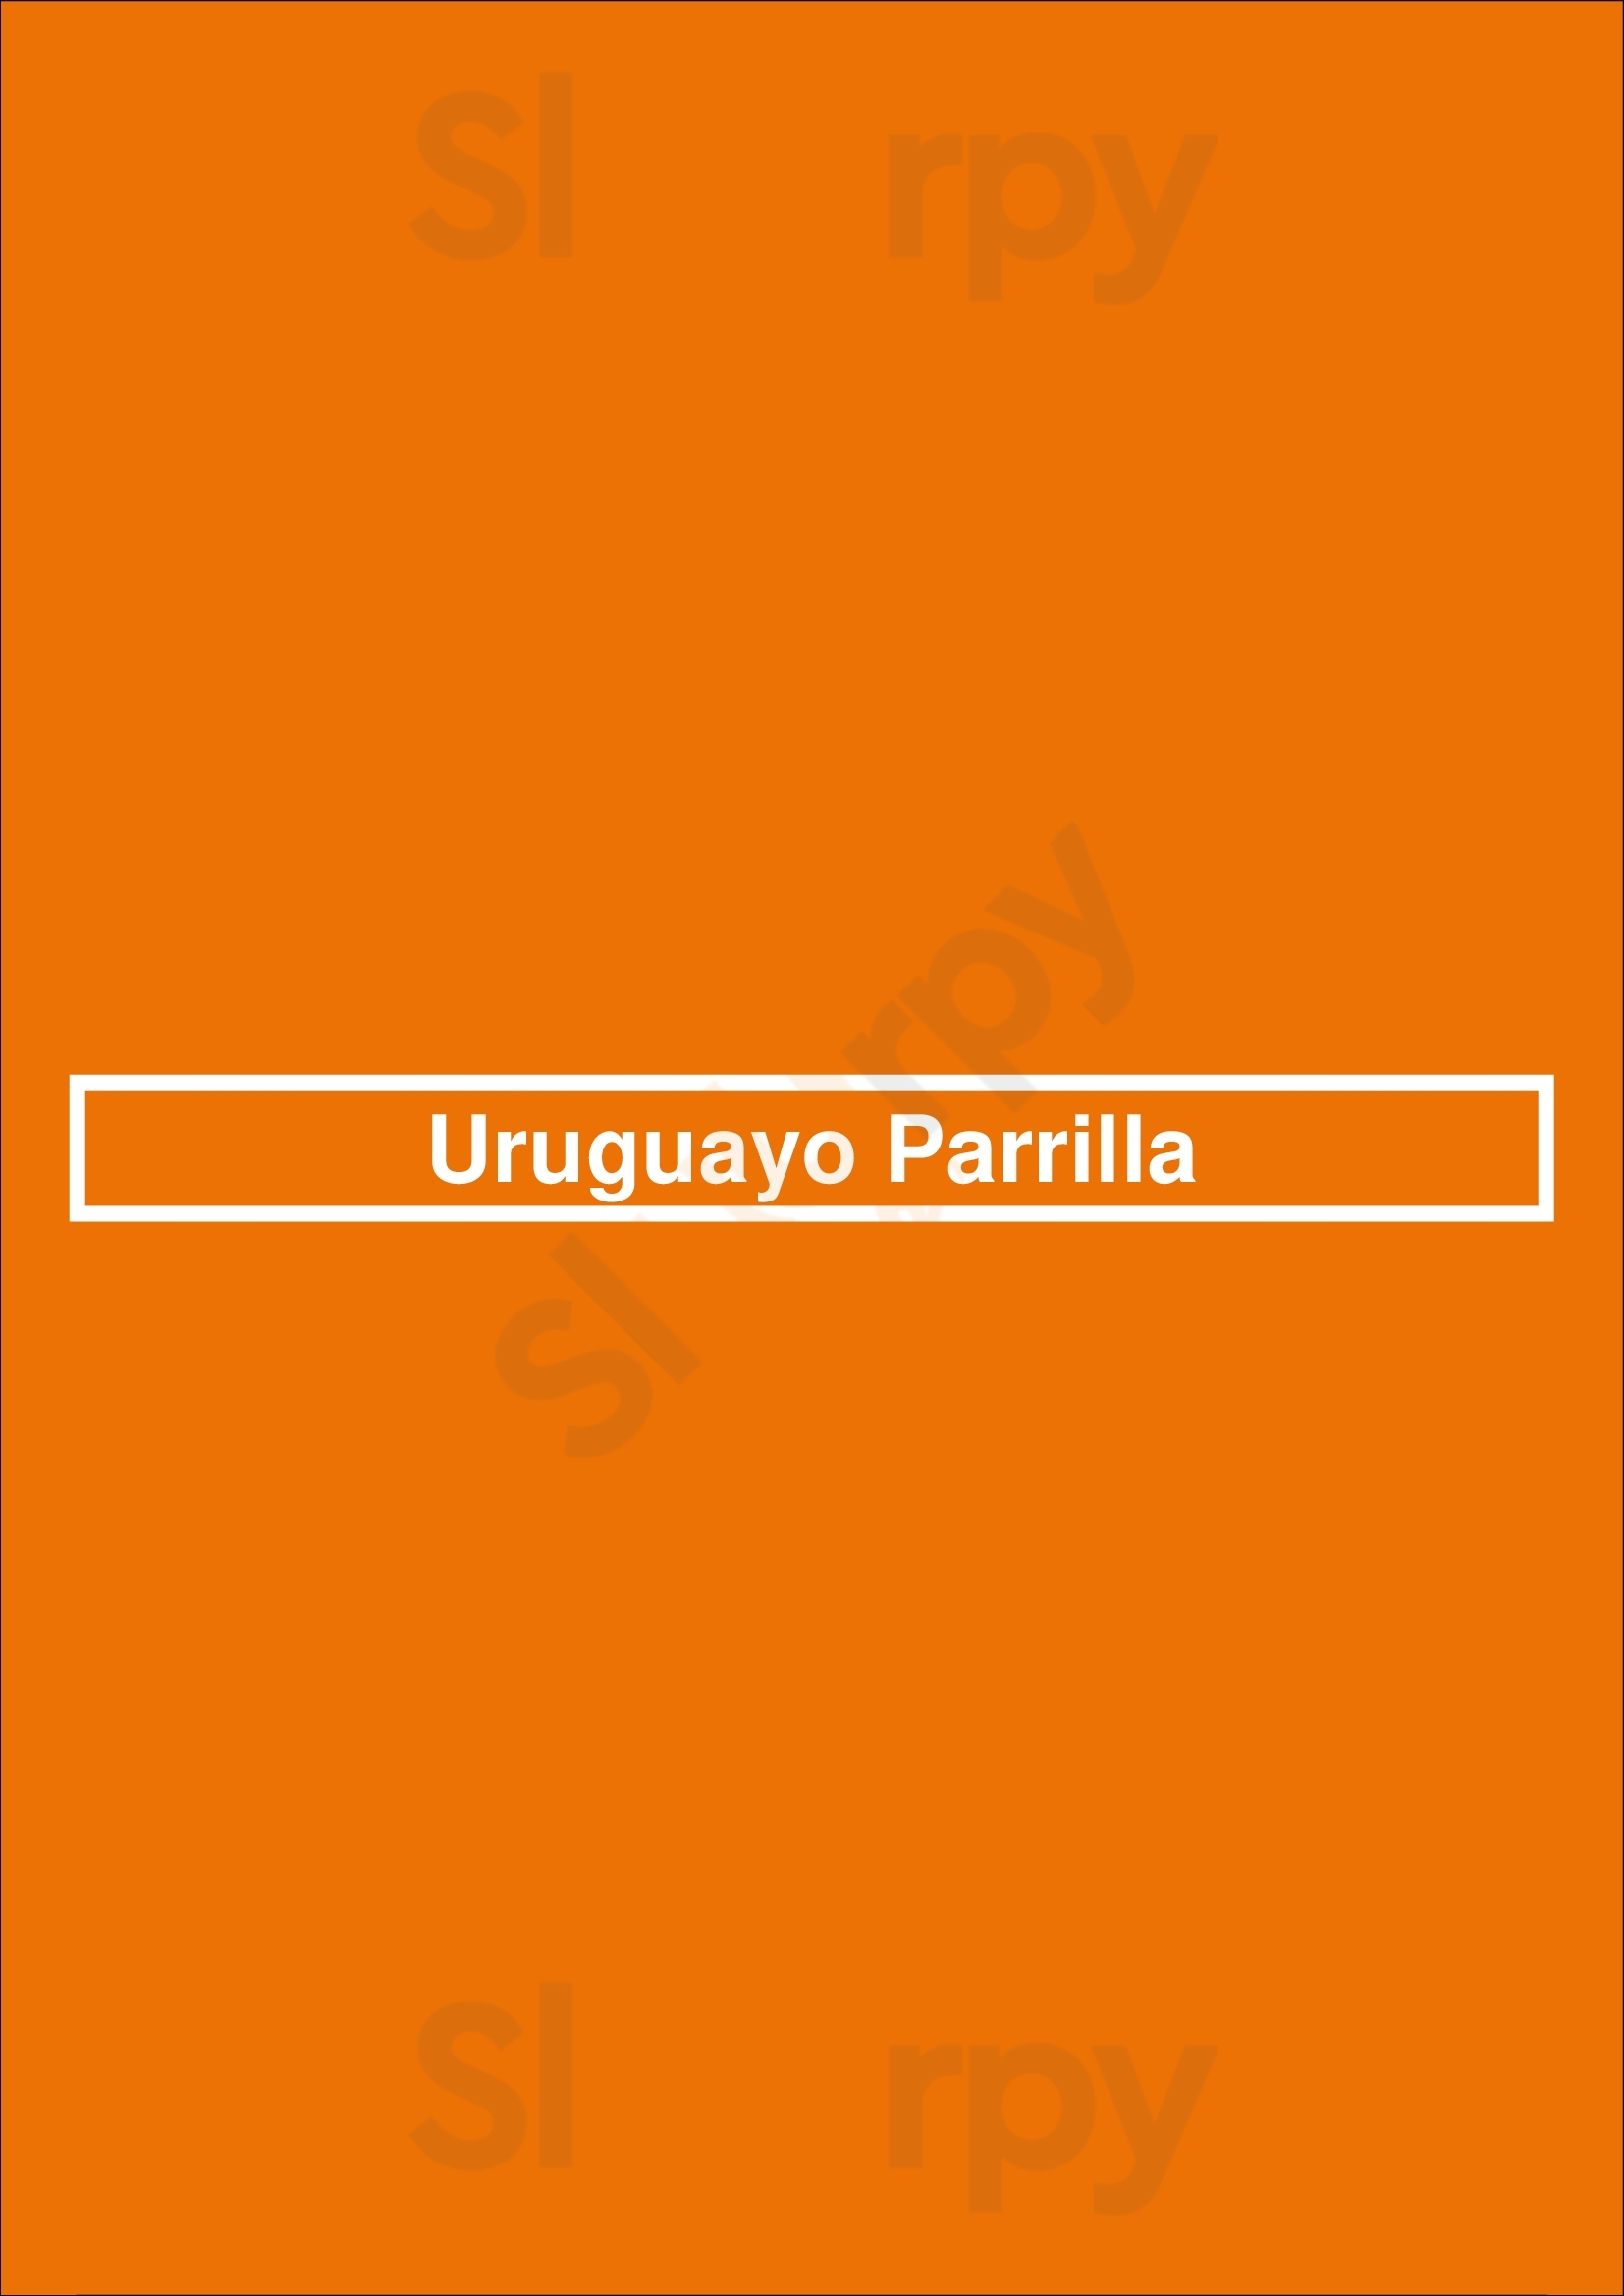 Uruguayo Parrilla Cuiabá Menu - 1